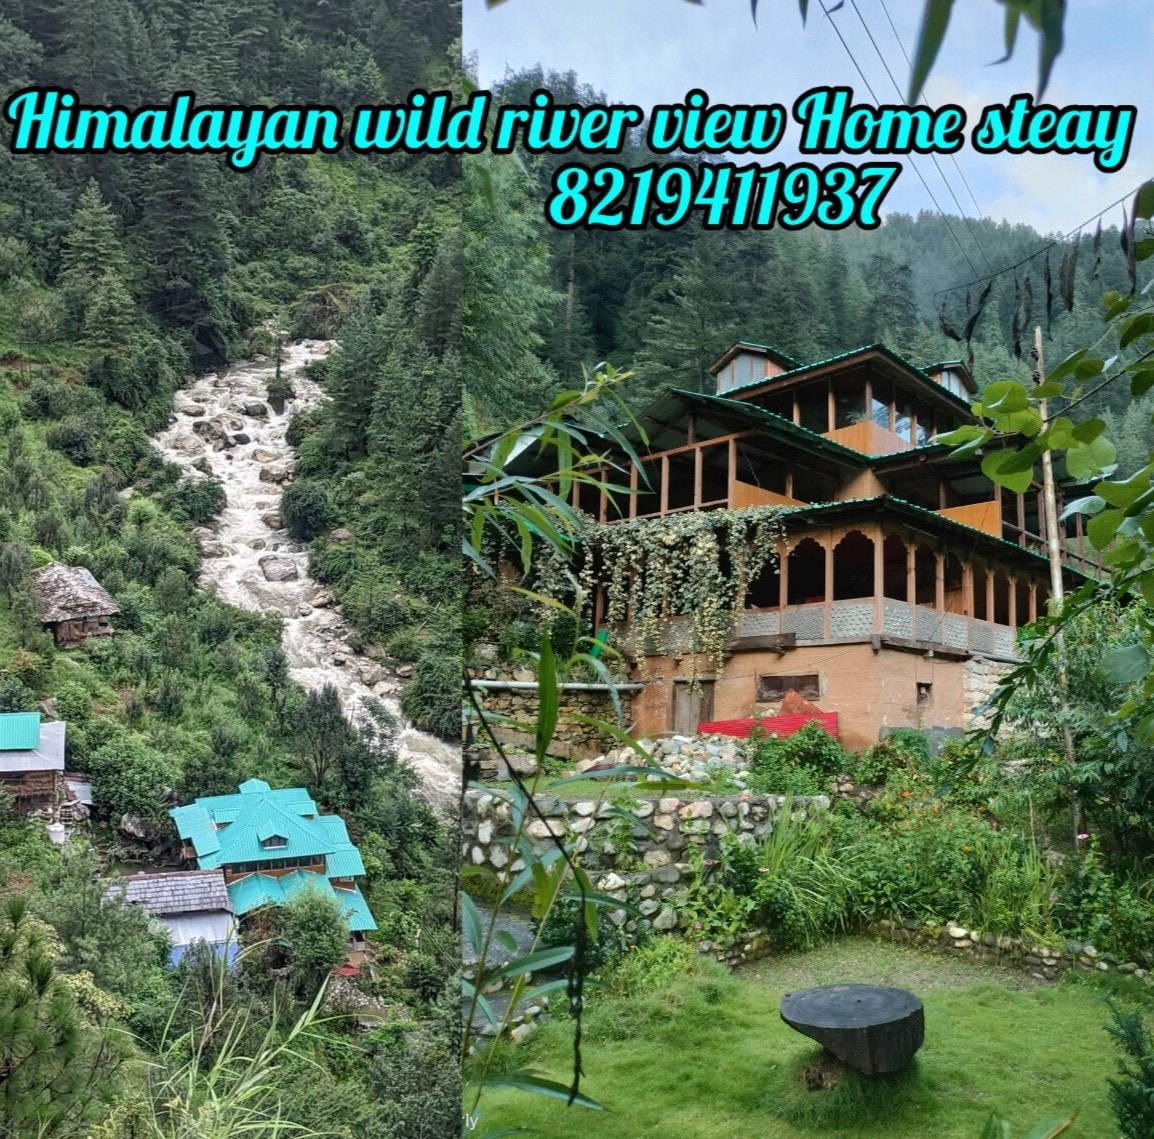 Himalayan Wild Riverview honesty